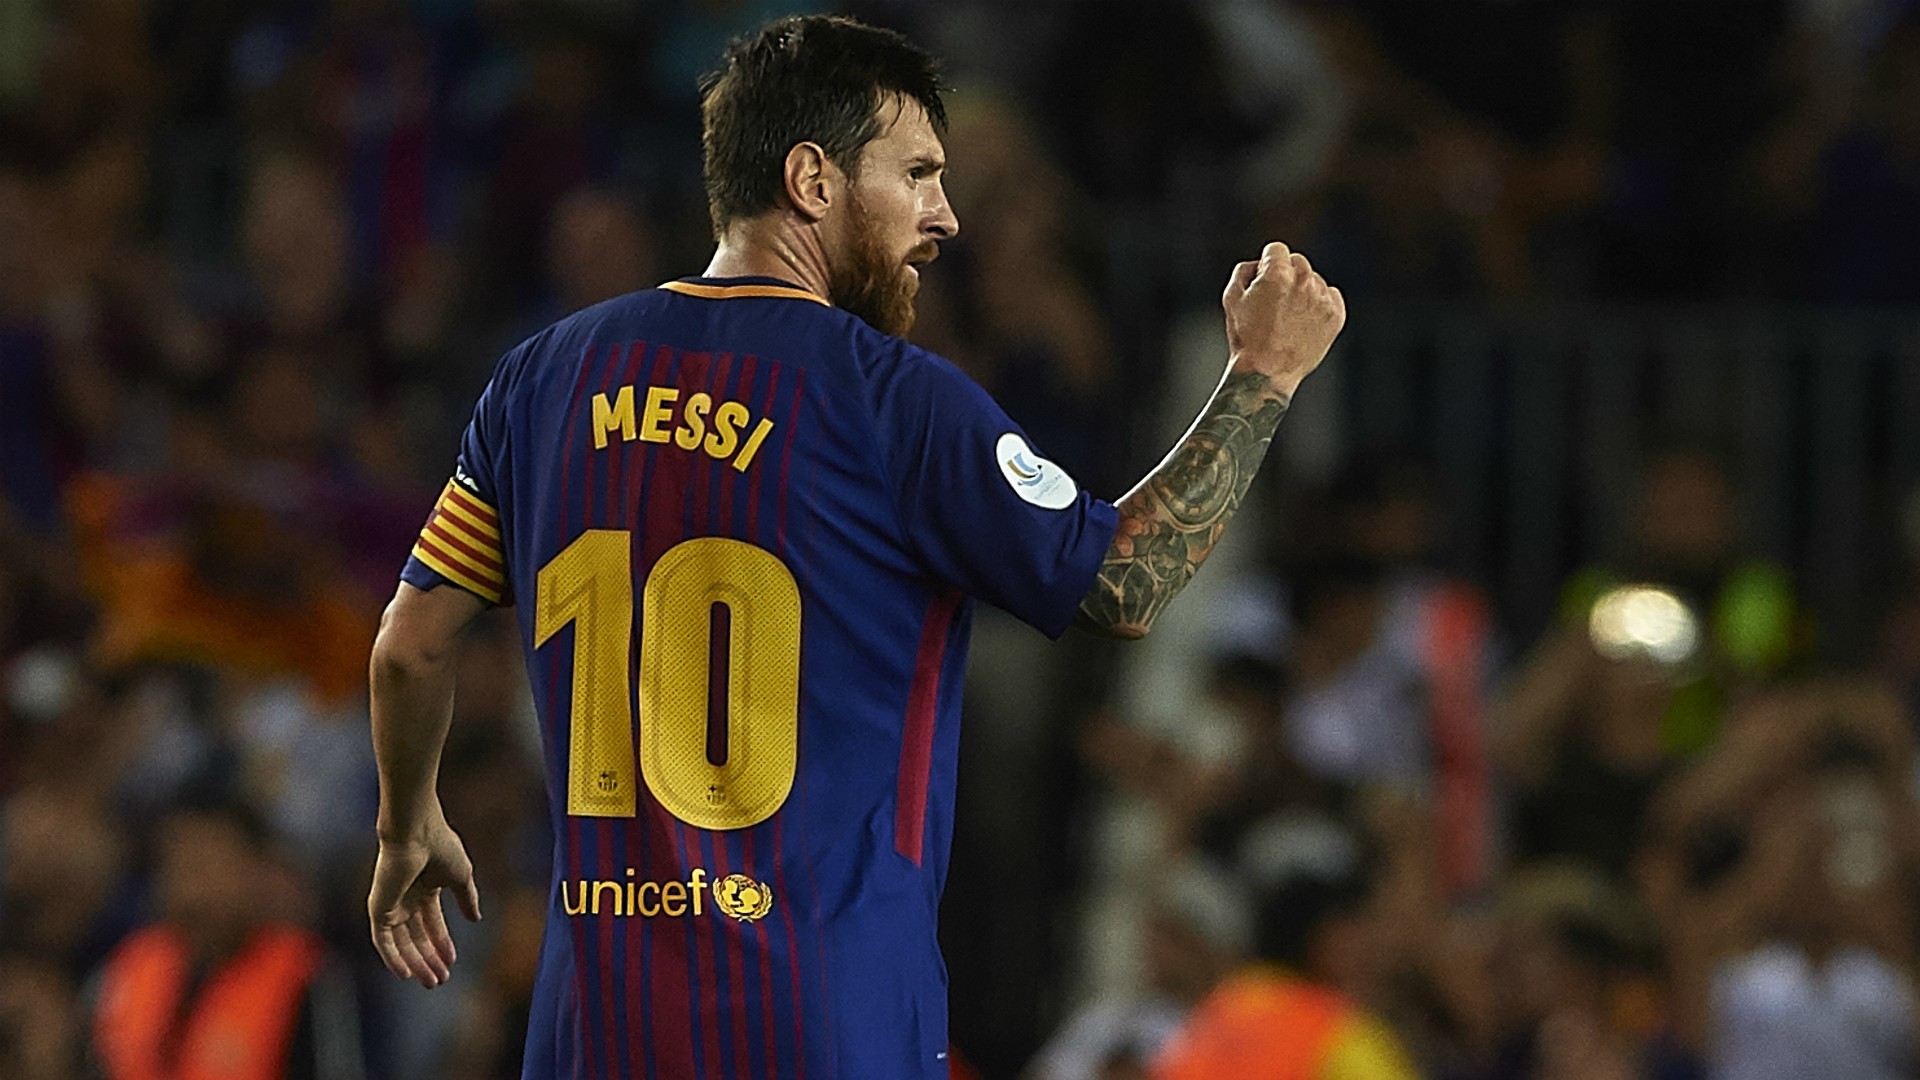 1920x1080 2019 Lionel Messi Best Wallpapers messi wallpaper 2018 4k Unique Messi  Wallpaper 2018 Hd ...